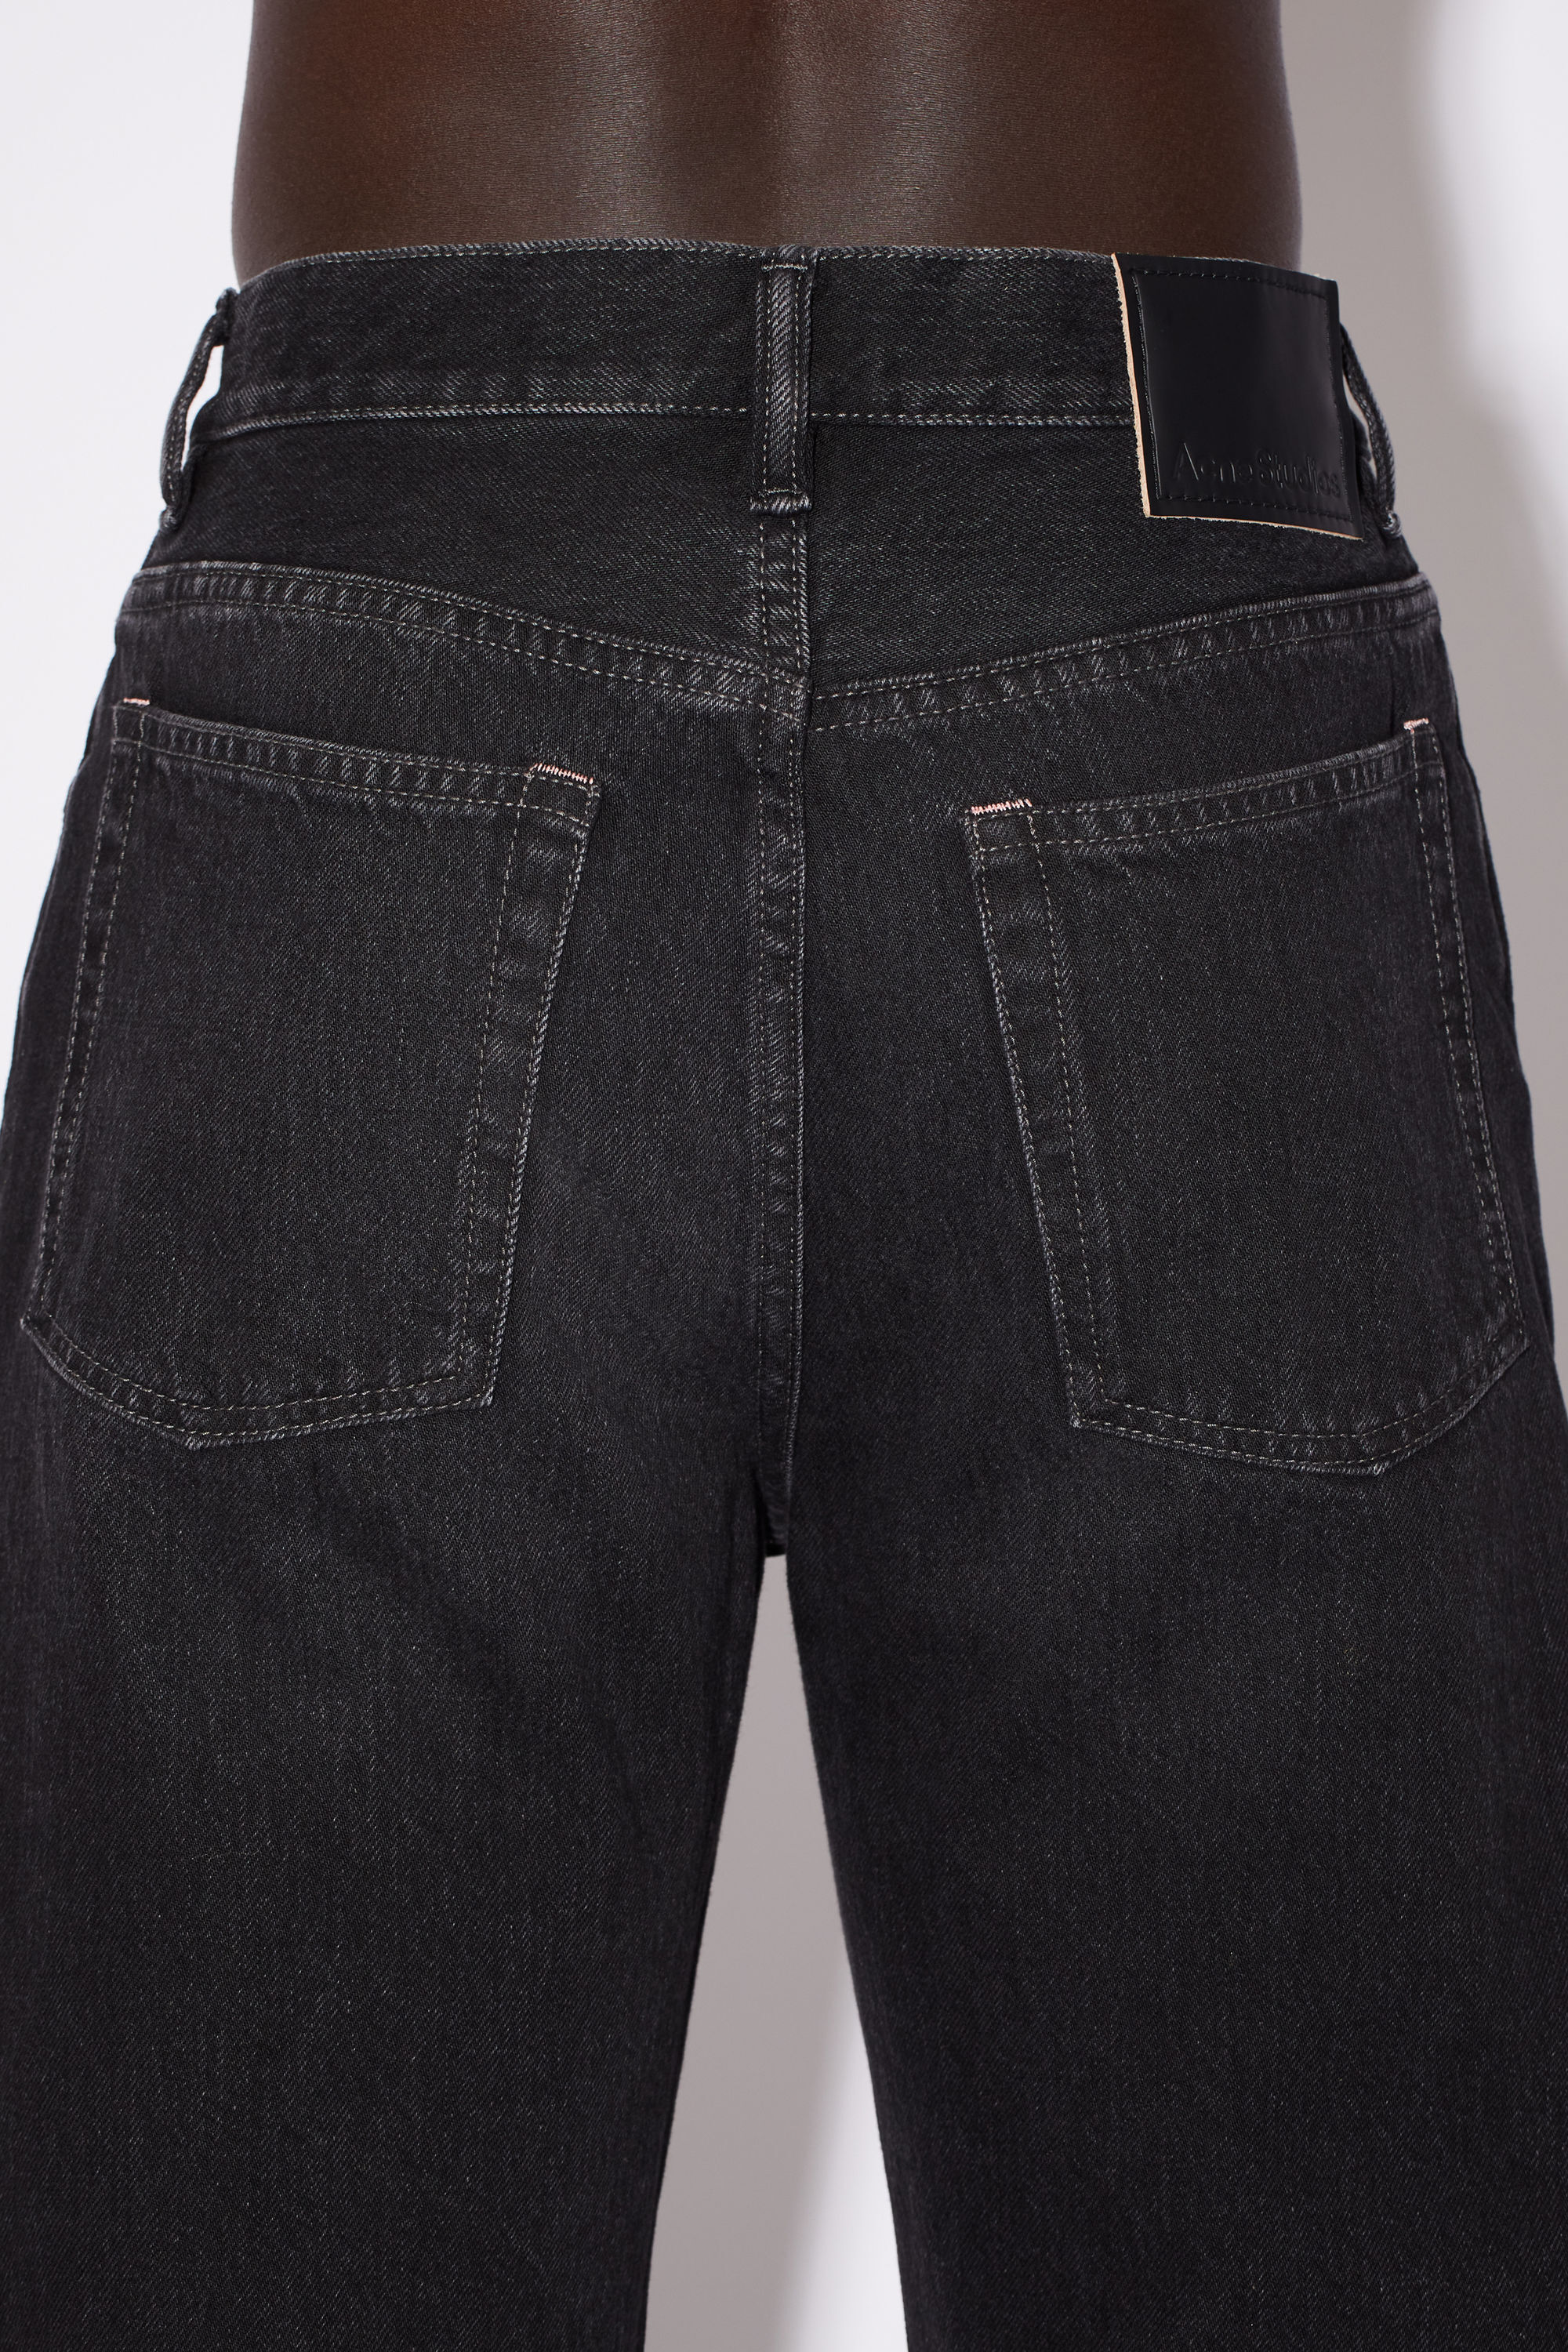 32/32 Acne Studios Loose Fit Jeans Black